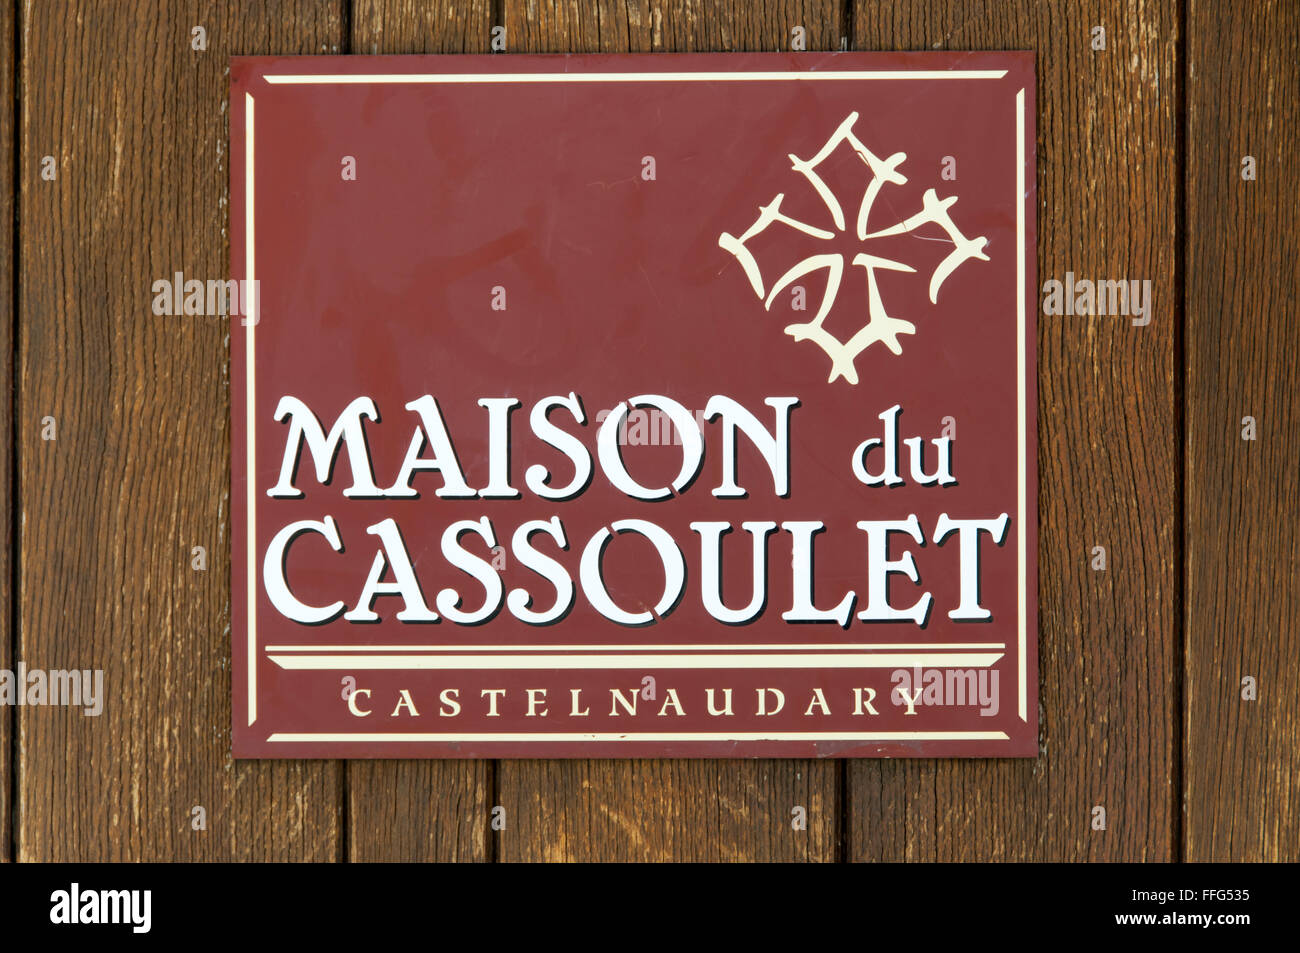 Sign for Maison du Cassoulet, Castelnaudary. Stock Photo